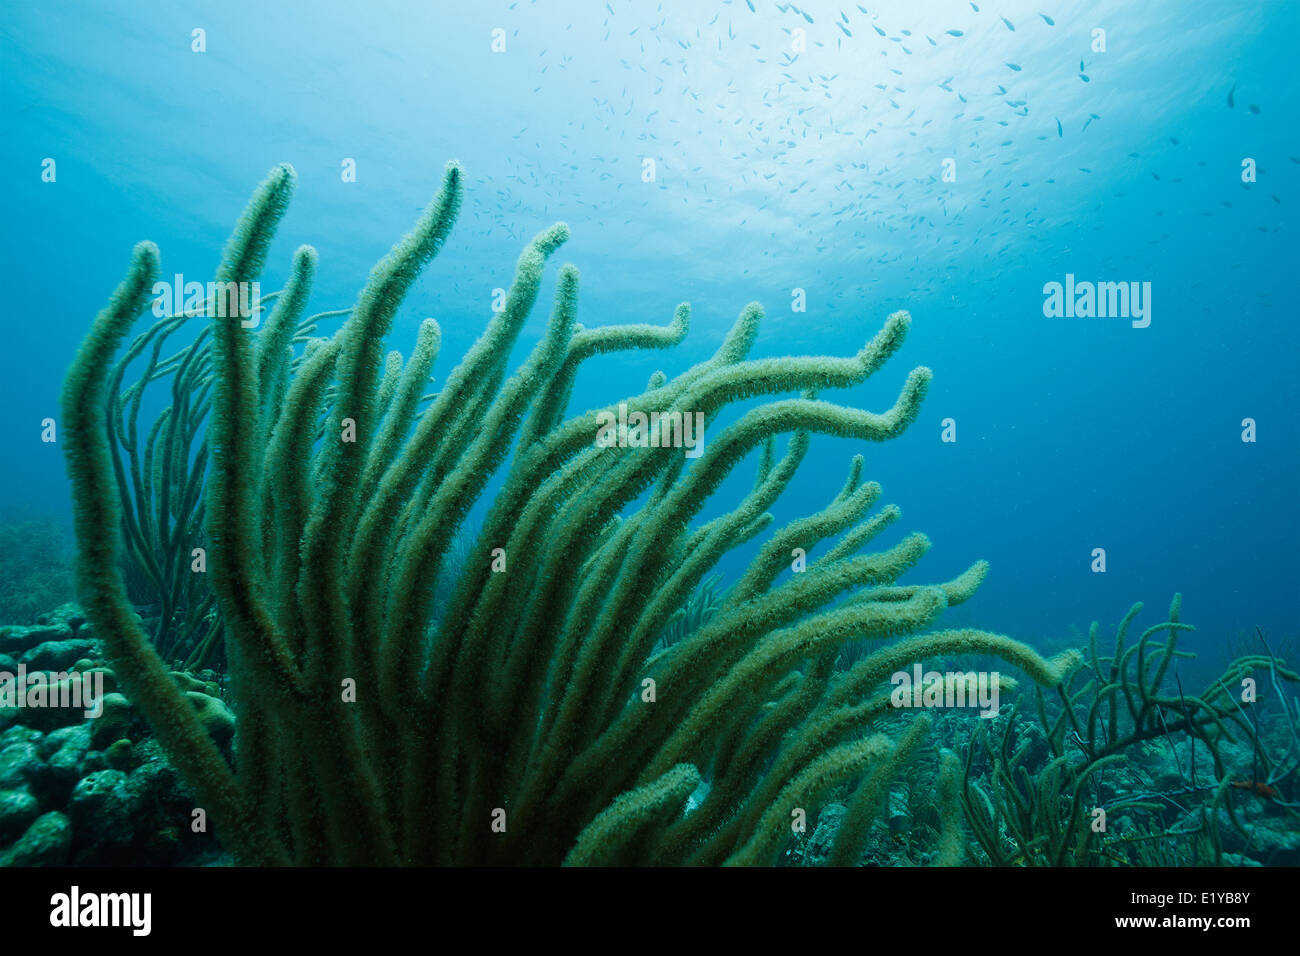 Giant sea rod (Plexaurella nutans) in the Caribbean sea around Bonaire. Divesite Andrea 1. Grote zeeroede. Photo V.D. Stock Photo